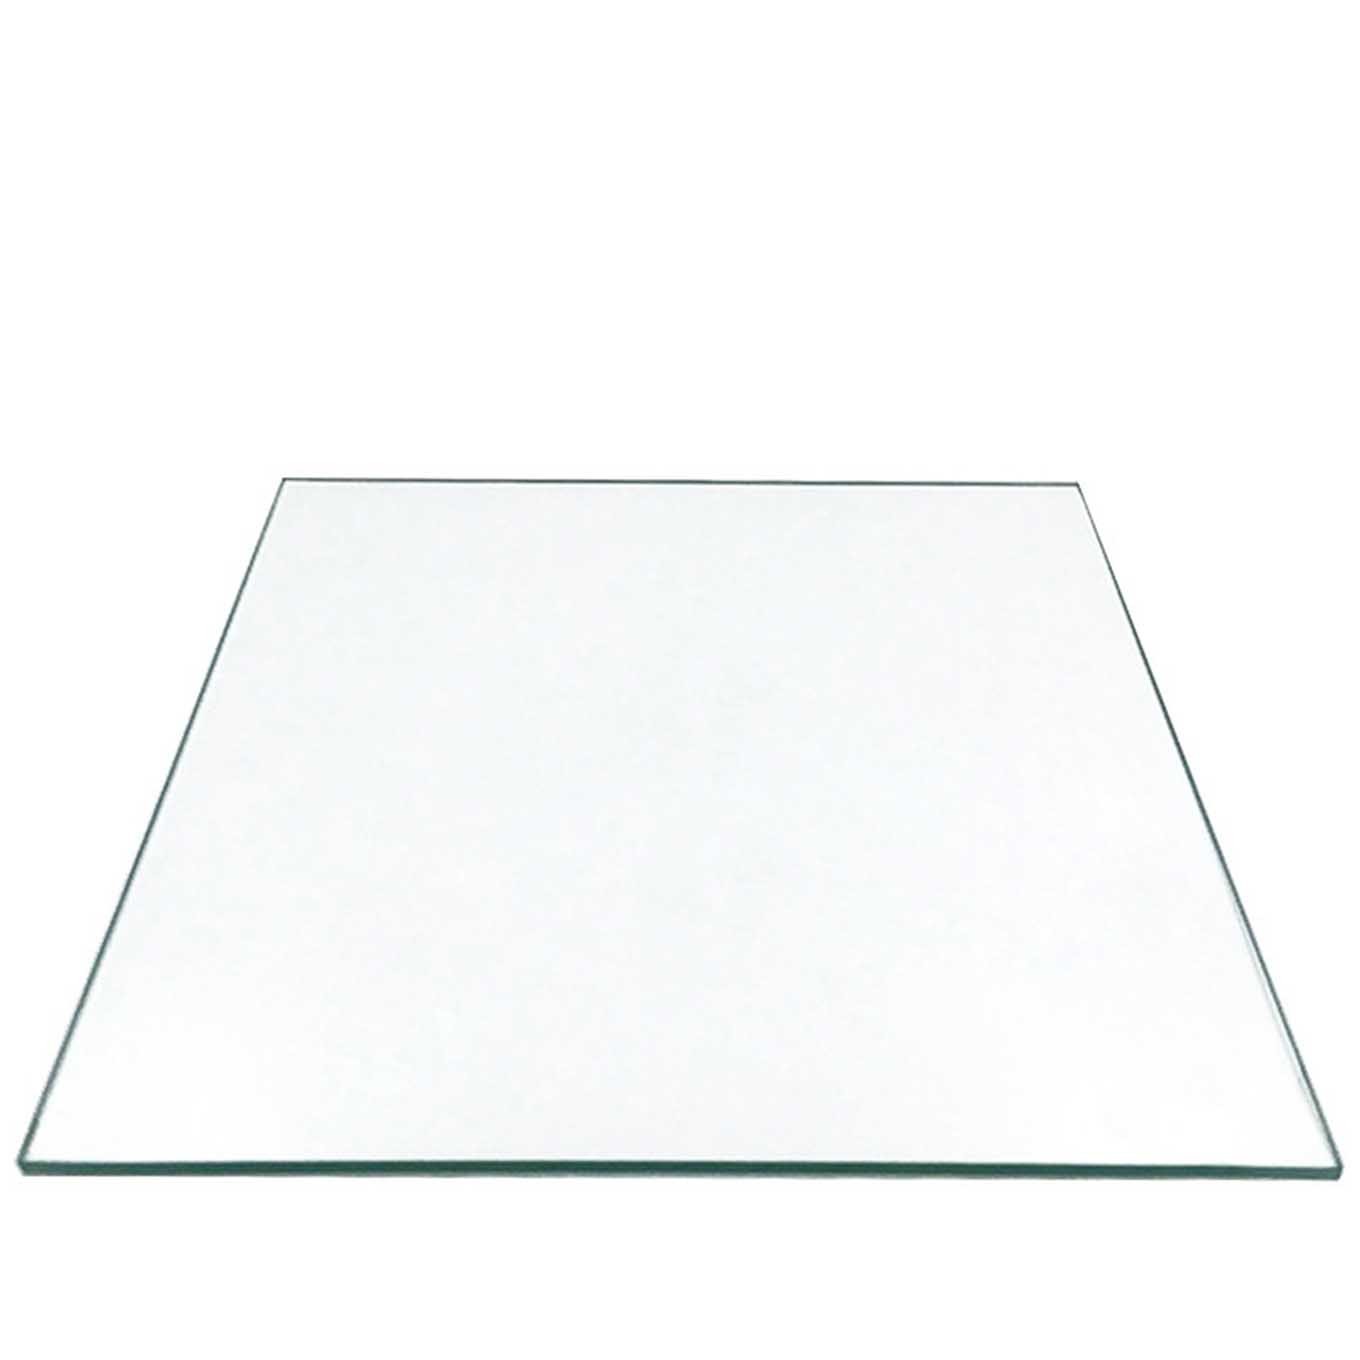 Quality Transparent MK2 Borosilicate Glass Plate 3D Printer 213mm*200mm*3mm for sale